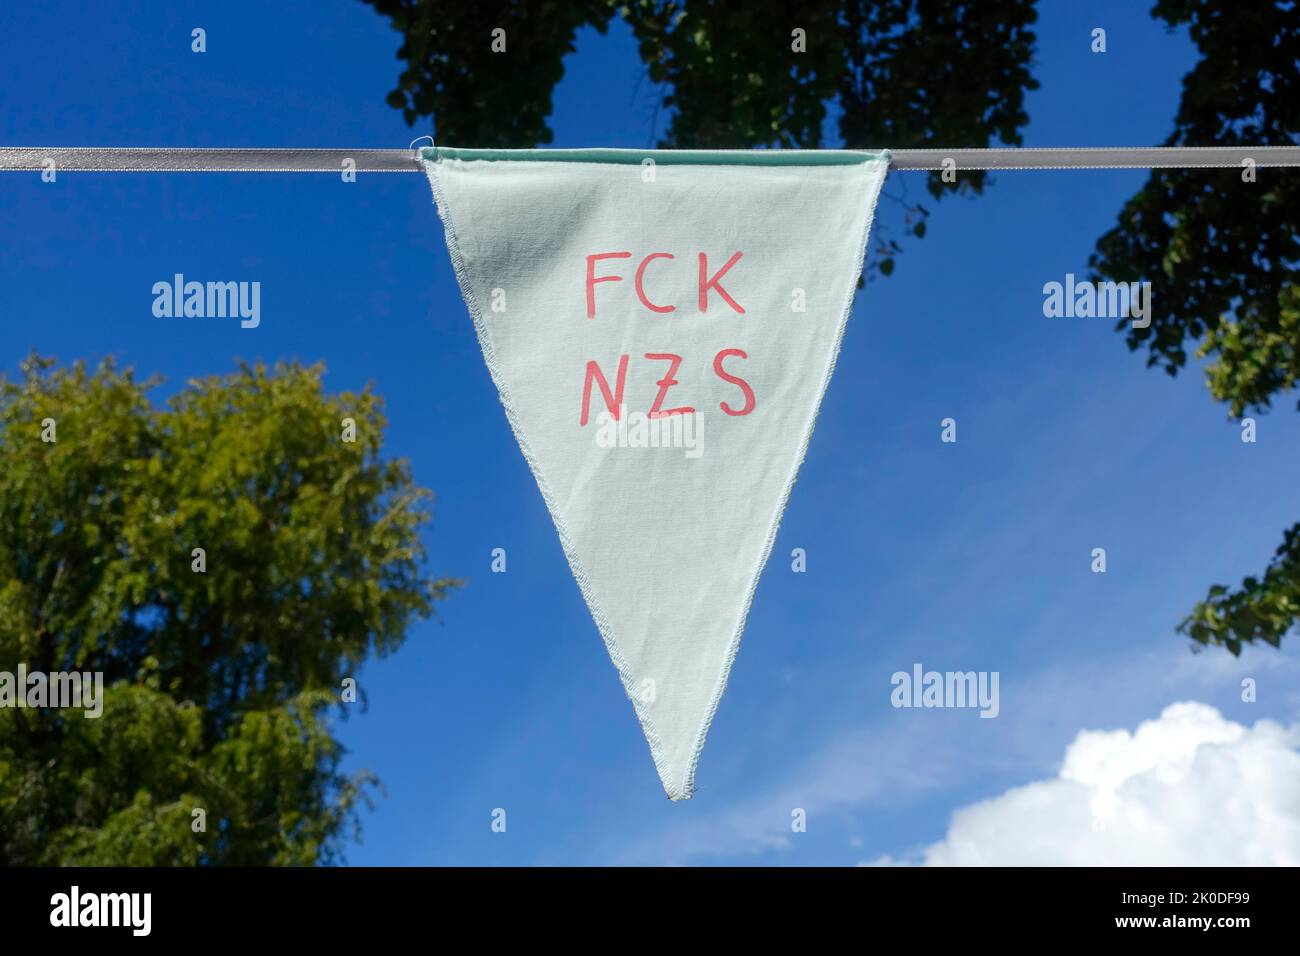 Flag Fck Nzs, Berlin, Germany Stock Photo